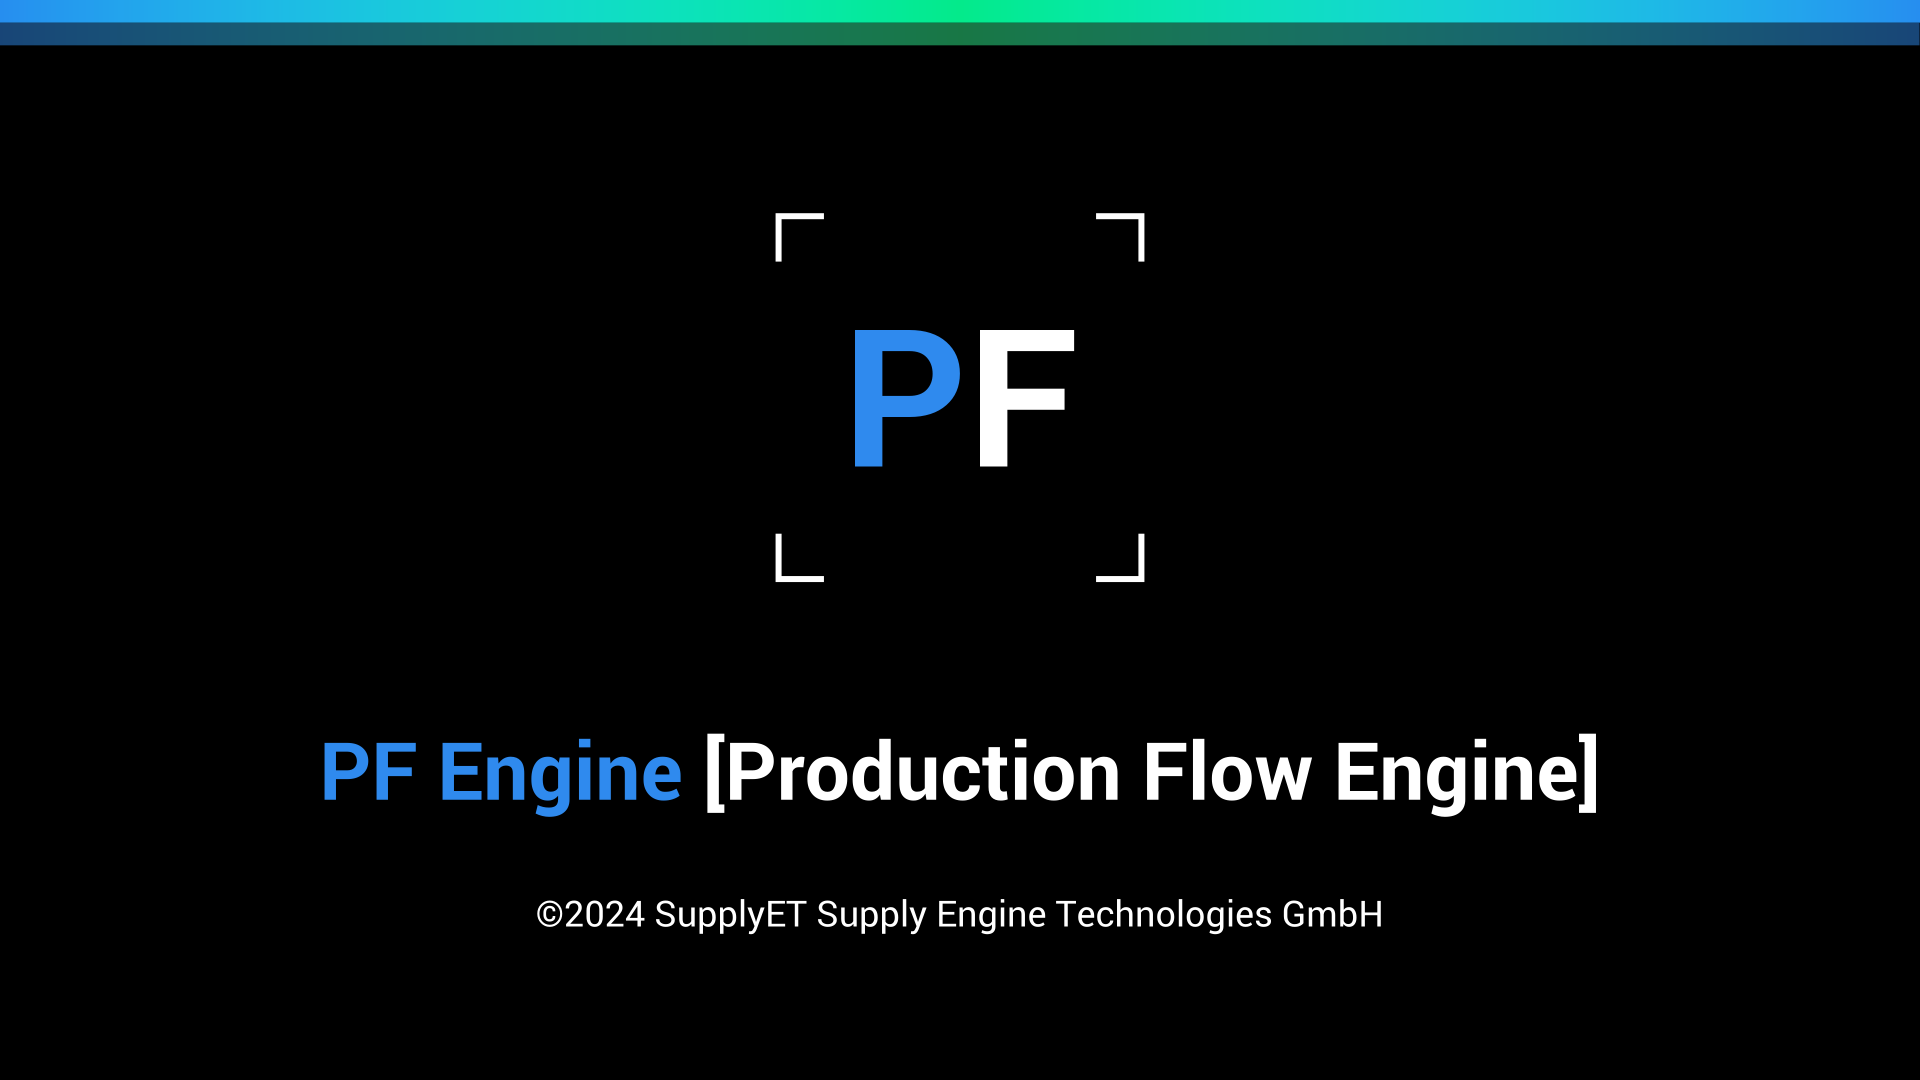 PF Engine: Image Carousel (1 of 8)